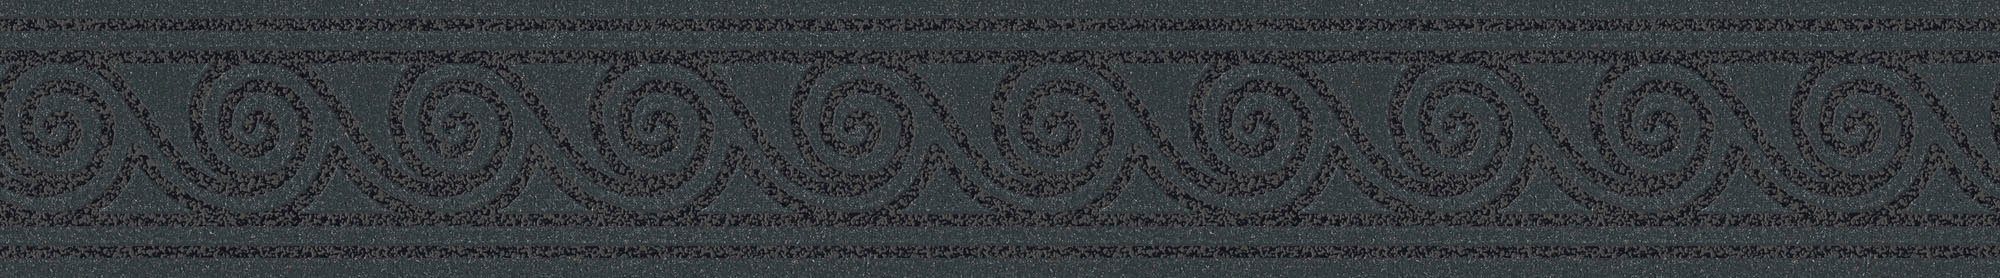 Borders Streifen, abstrakt, Bordüre Création Tapete schwarz glänzend, Bordüre Only A.S. 11, strukturiert, Wellen